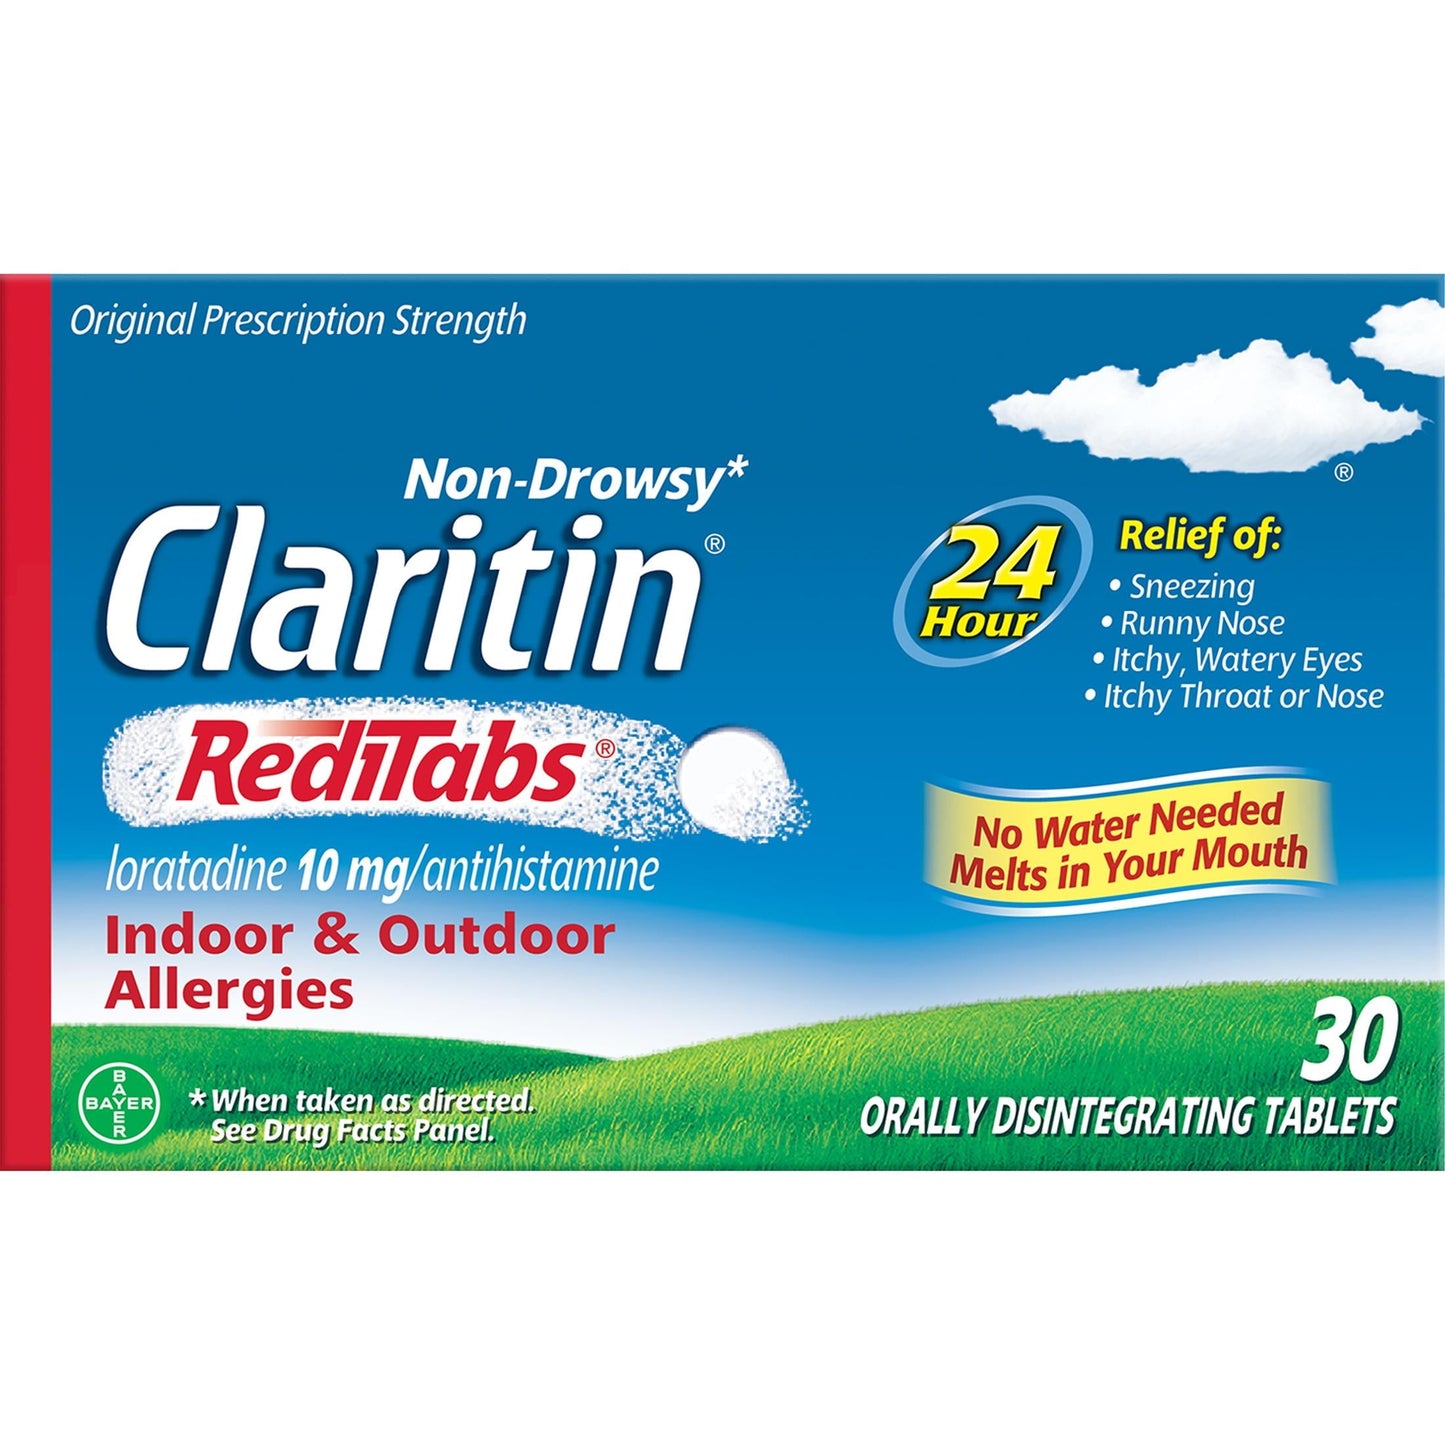 Claritin RediTabs 24 Hour Non-Drowsy Allergy Medicine, Loratadine Antihistamine Tablets, 30 Ct